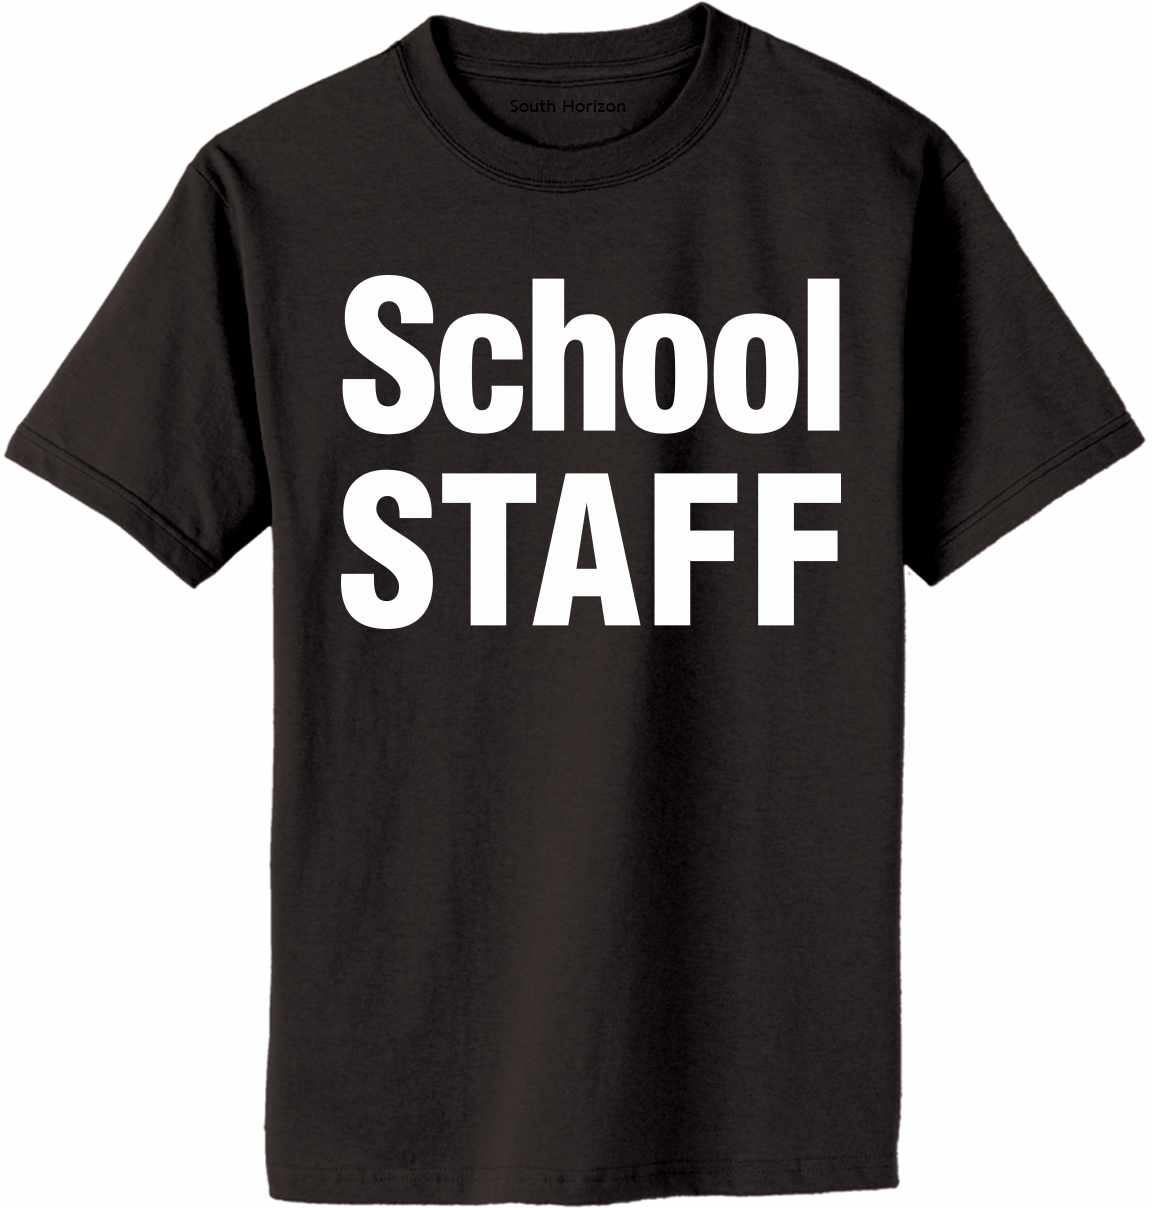 School STAFF on Adult T-Shirt